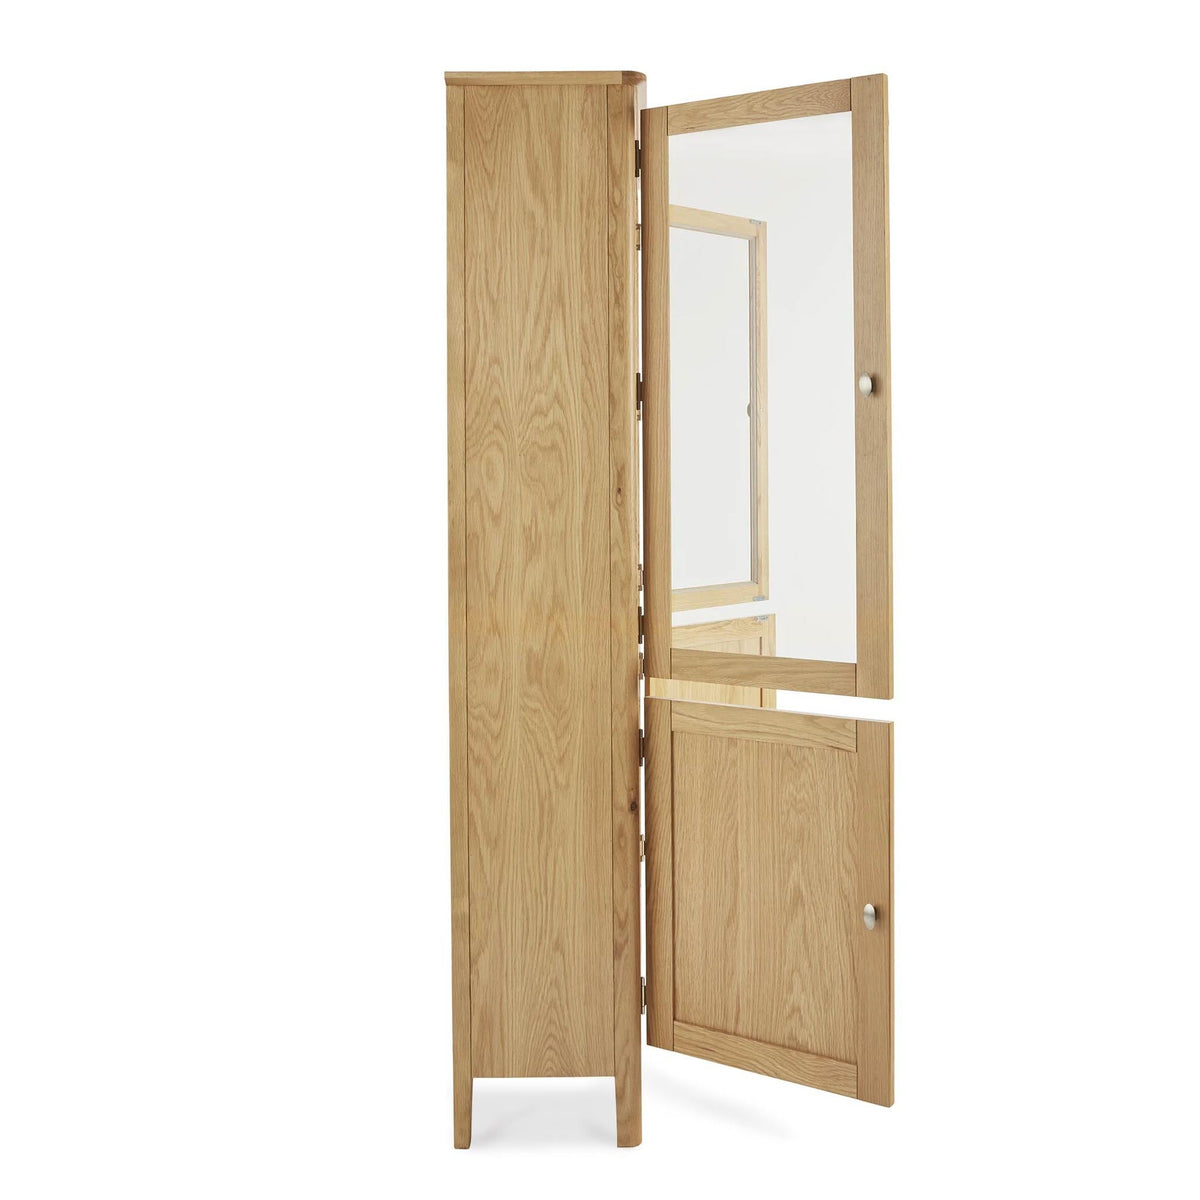 Alba Oak Display Cabinet - Side on view with doors open